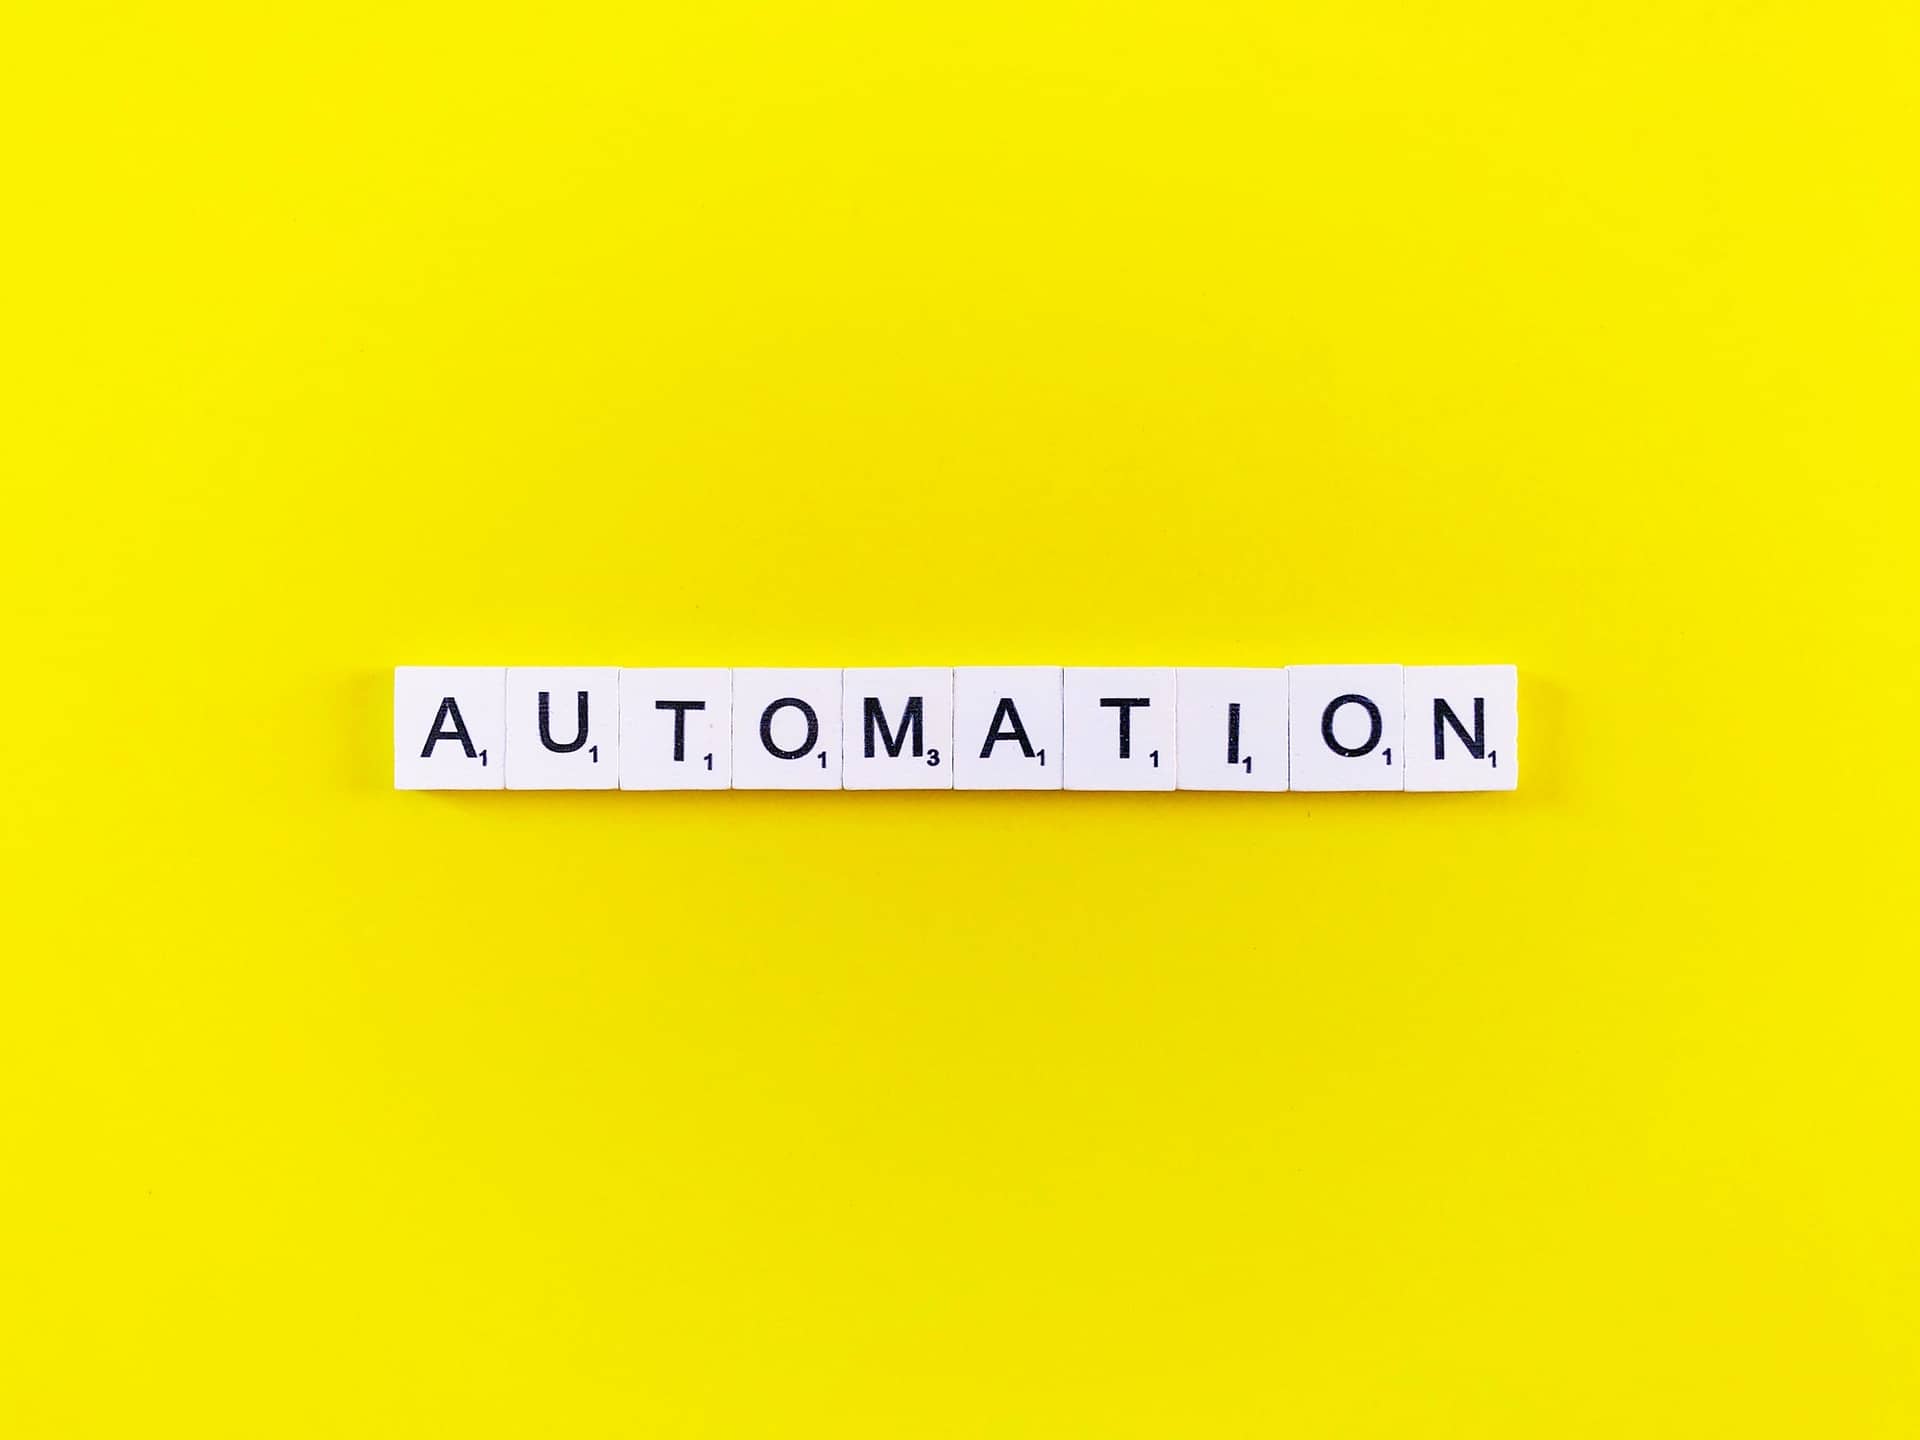 automation